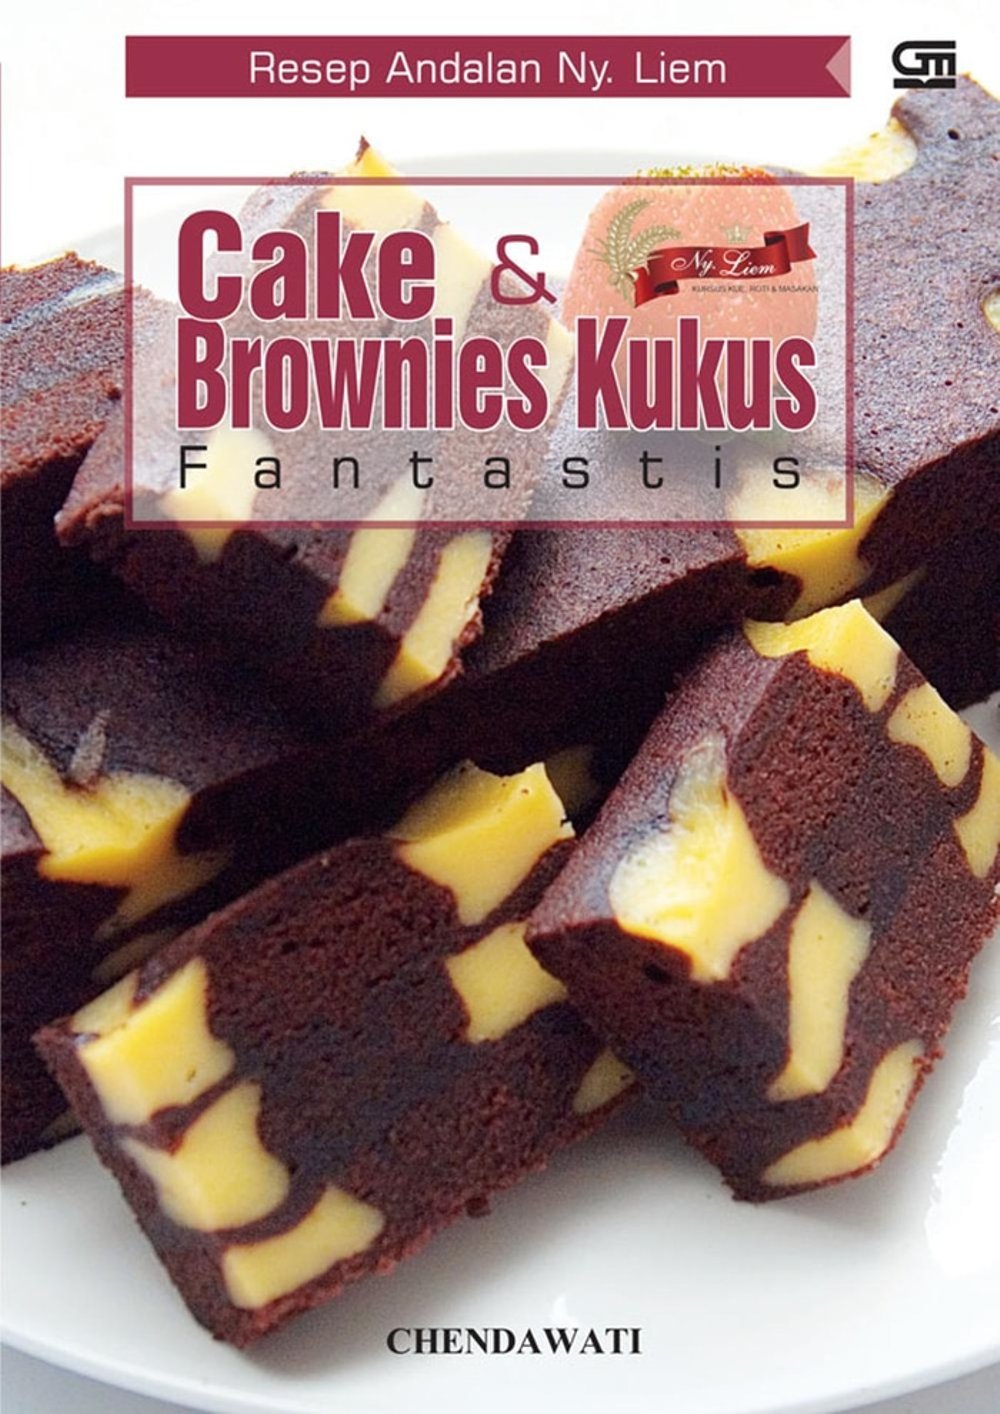 Resep Andalan Ny. Liem Cake & Brownies Kukus Fantastis